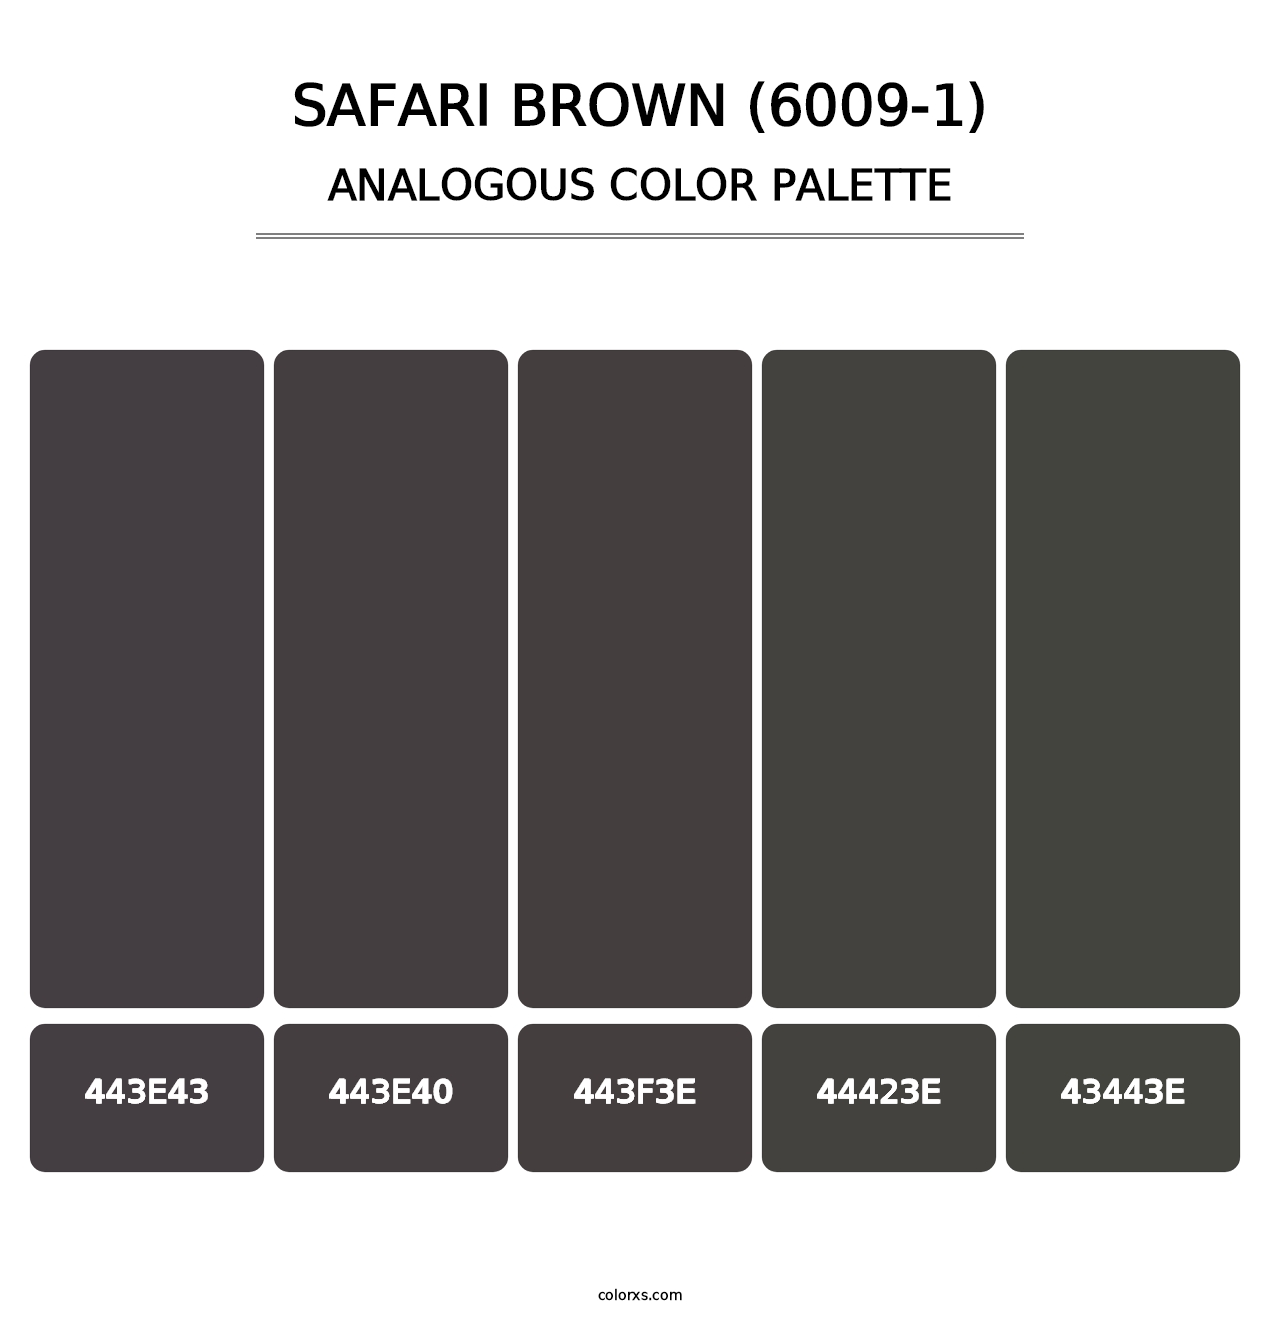 Safari Brown (6009-1) - Analogous Color Palette